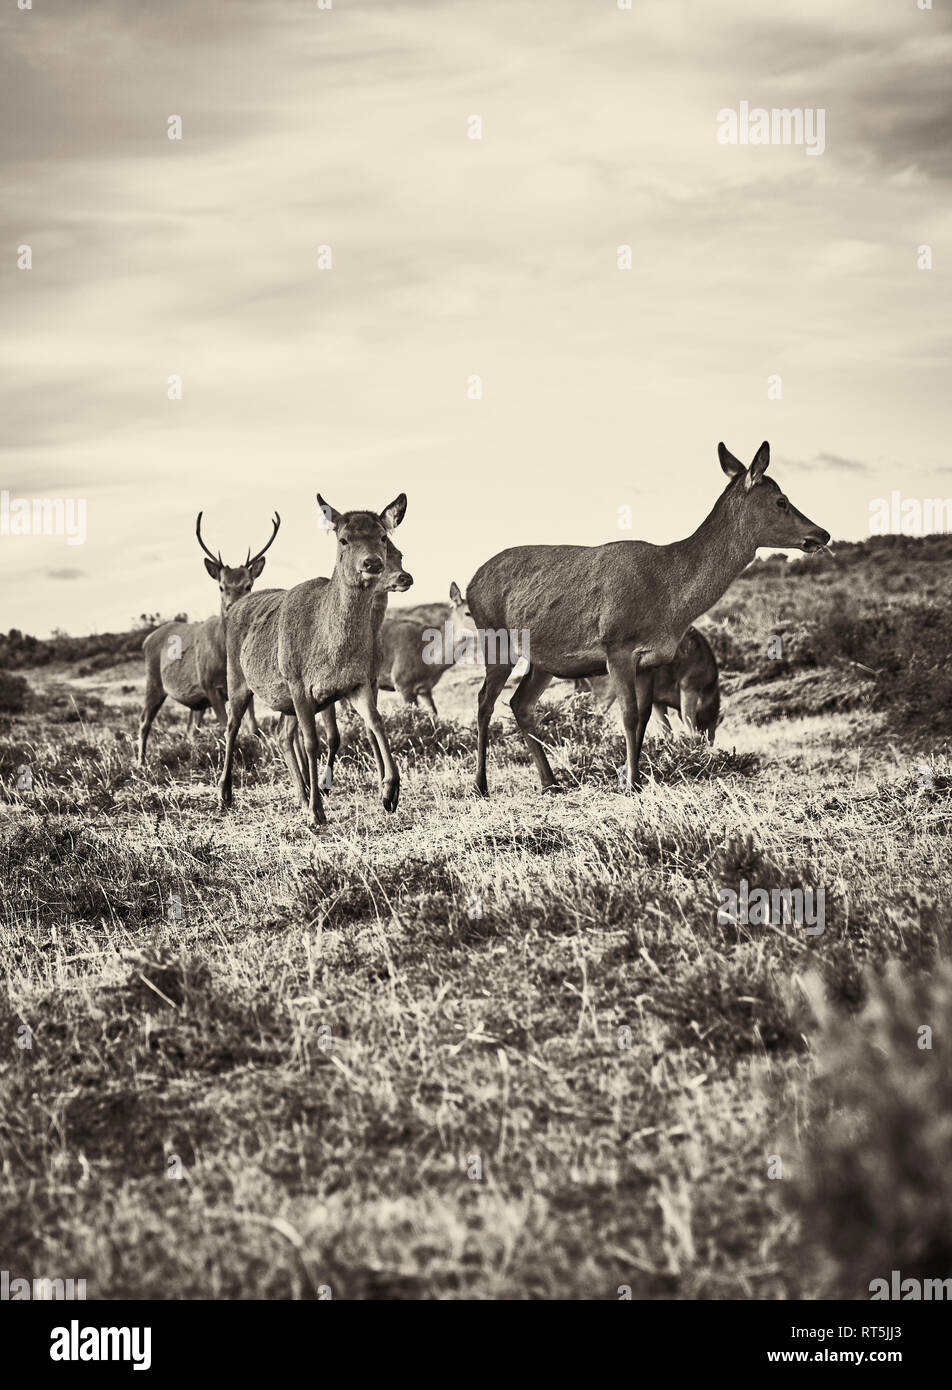 Chili, Terre de Feu, Porvenir, deer running in grass Banque D'Images